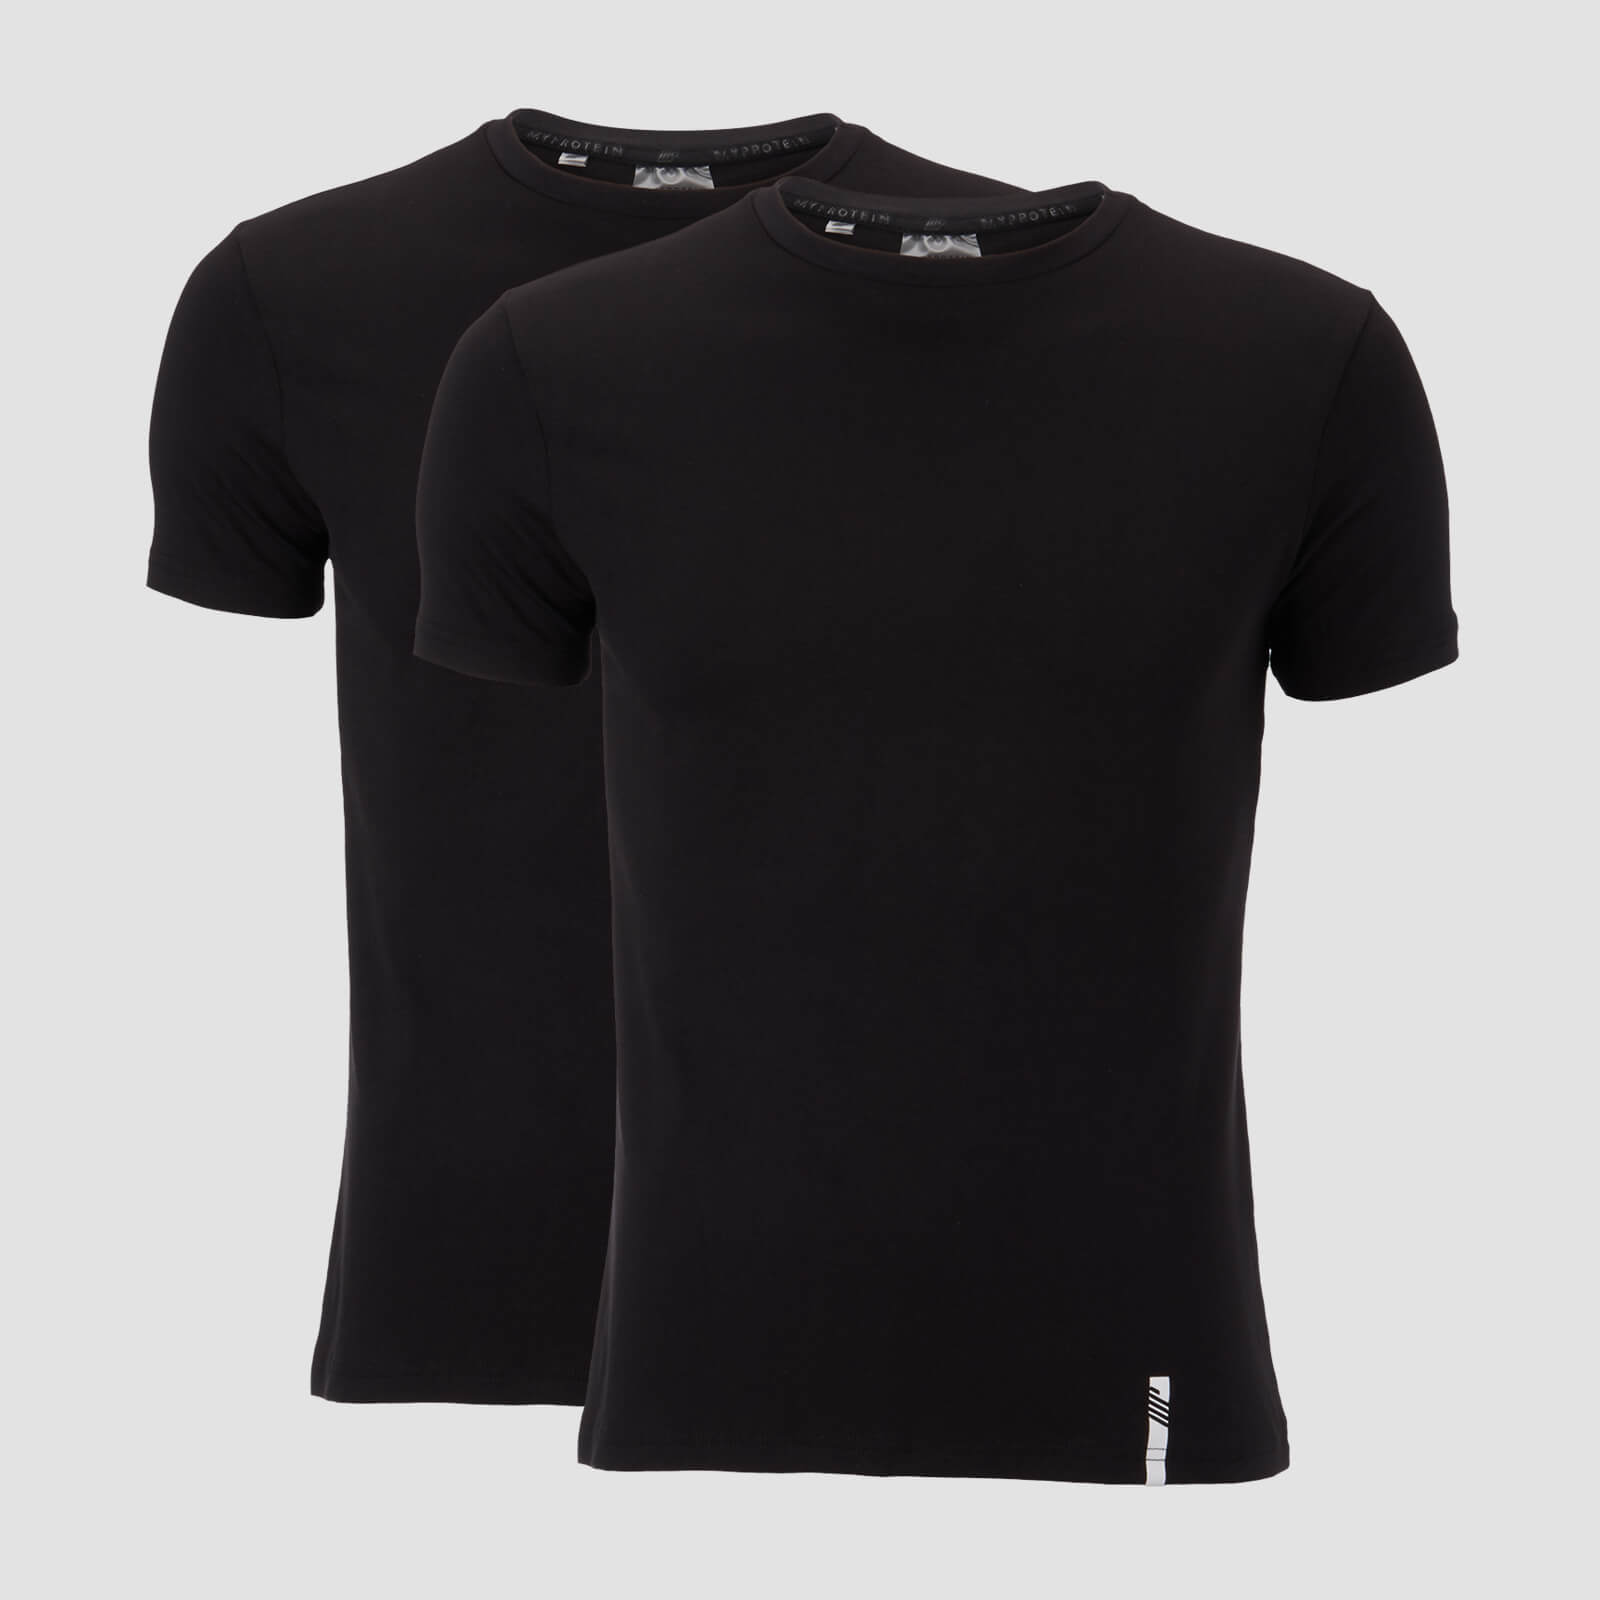 Luxe Classic Crew T-Shirt (2 Pack) - Black/Black